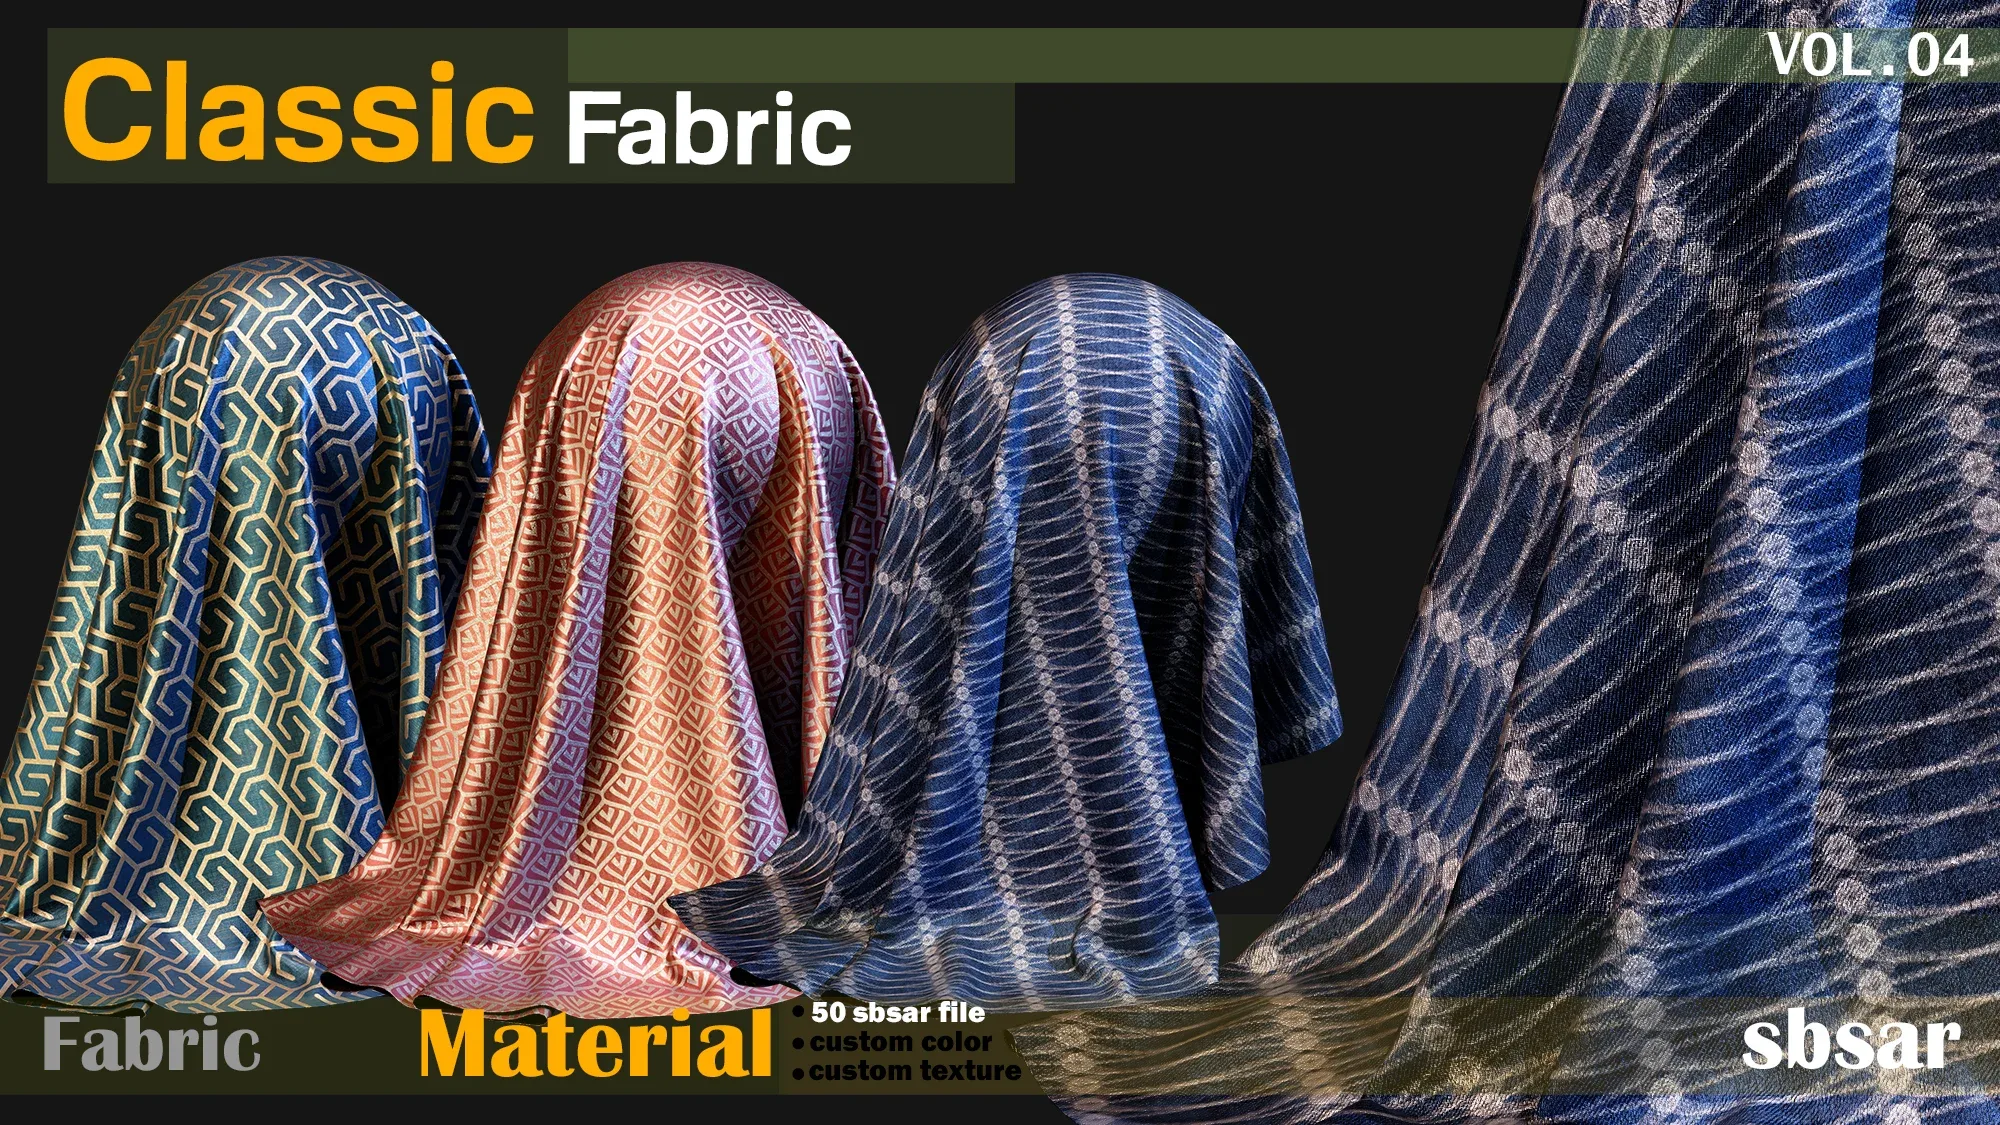 Classic Fabric Material -SBSAR  -custom color -custom fabric texture -VOL 04